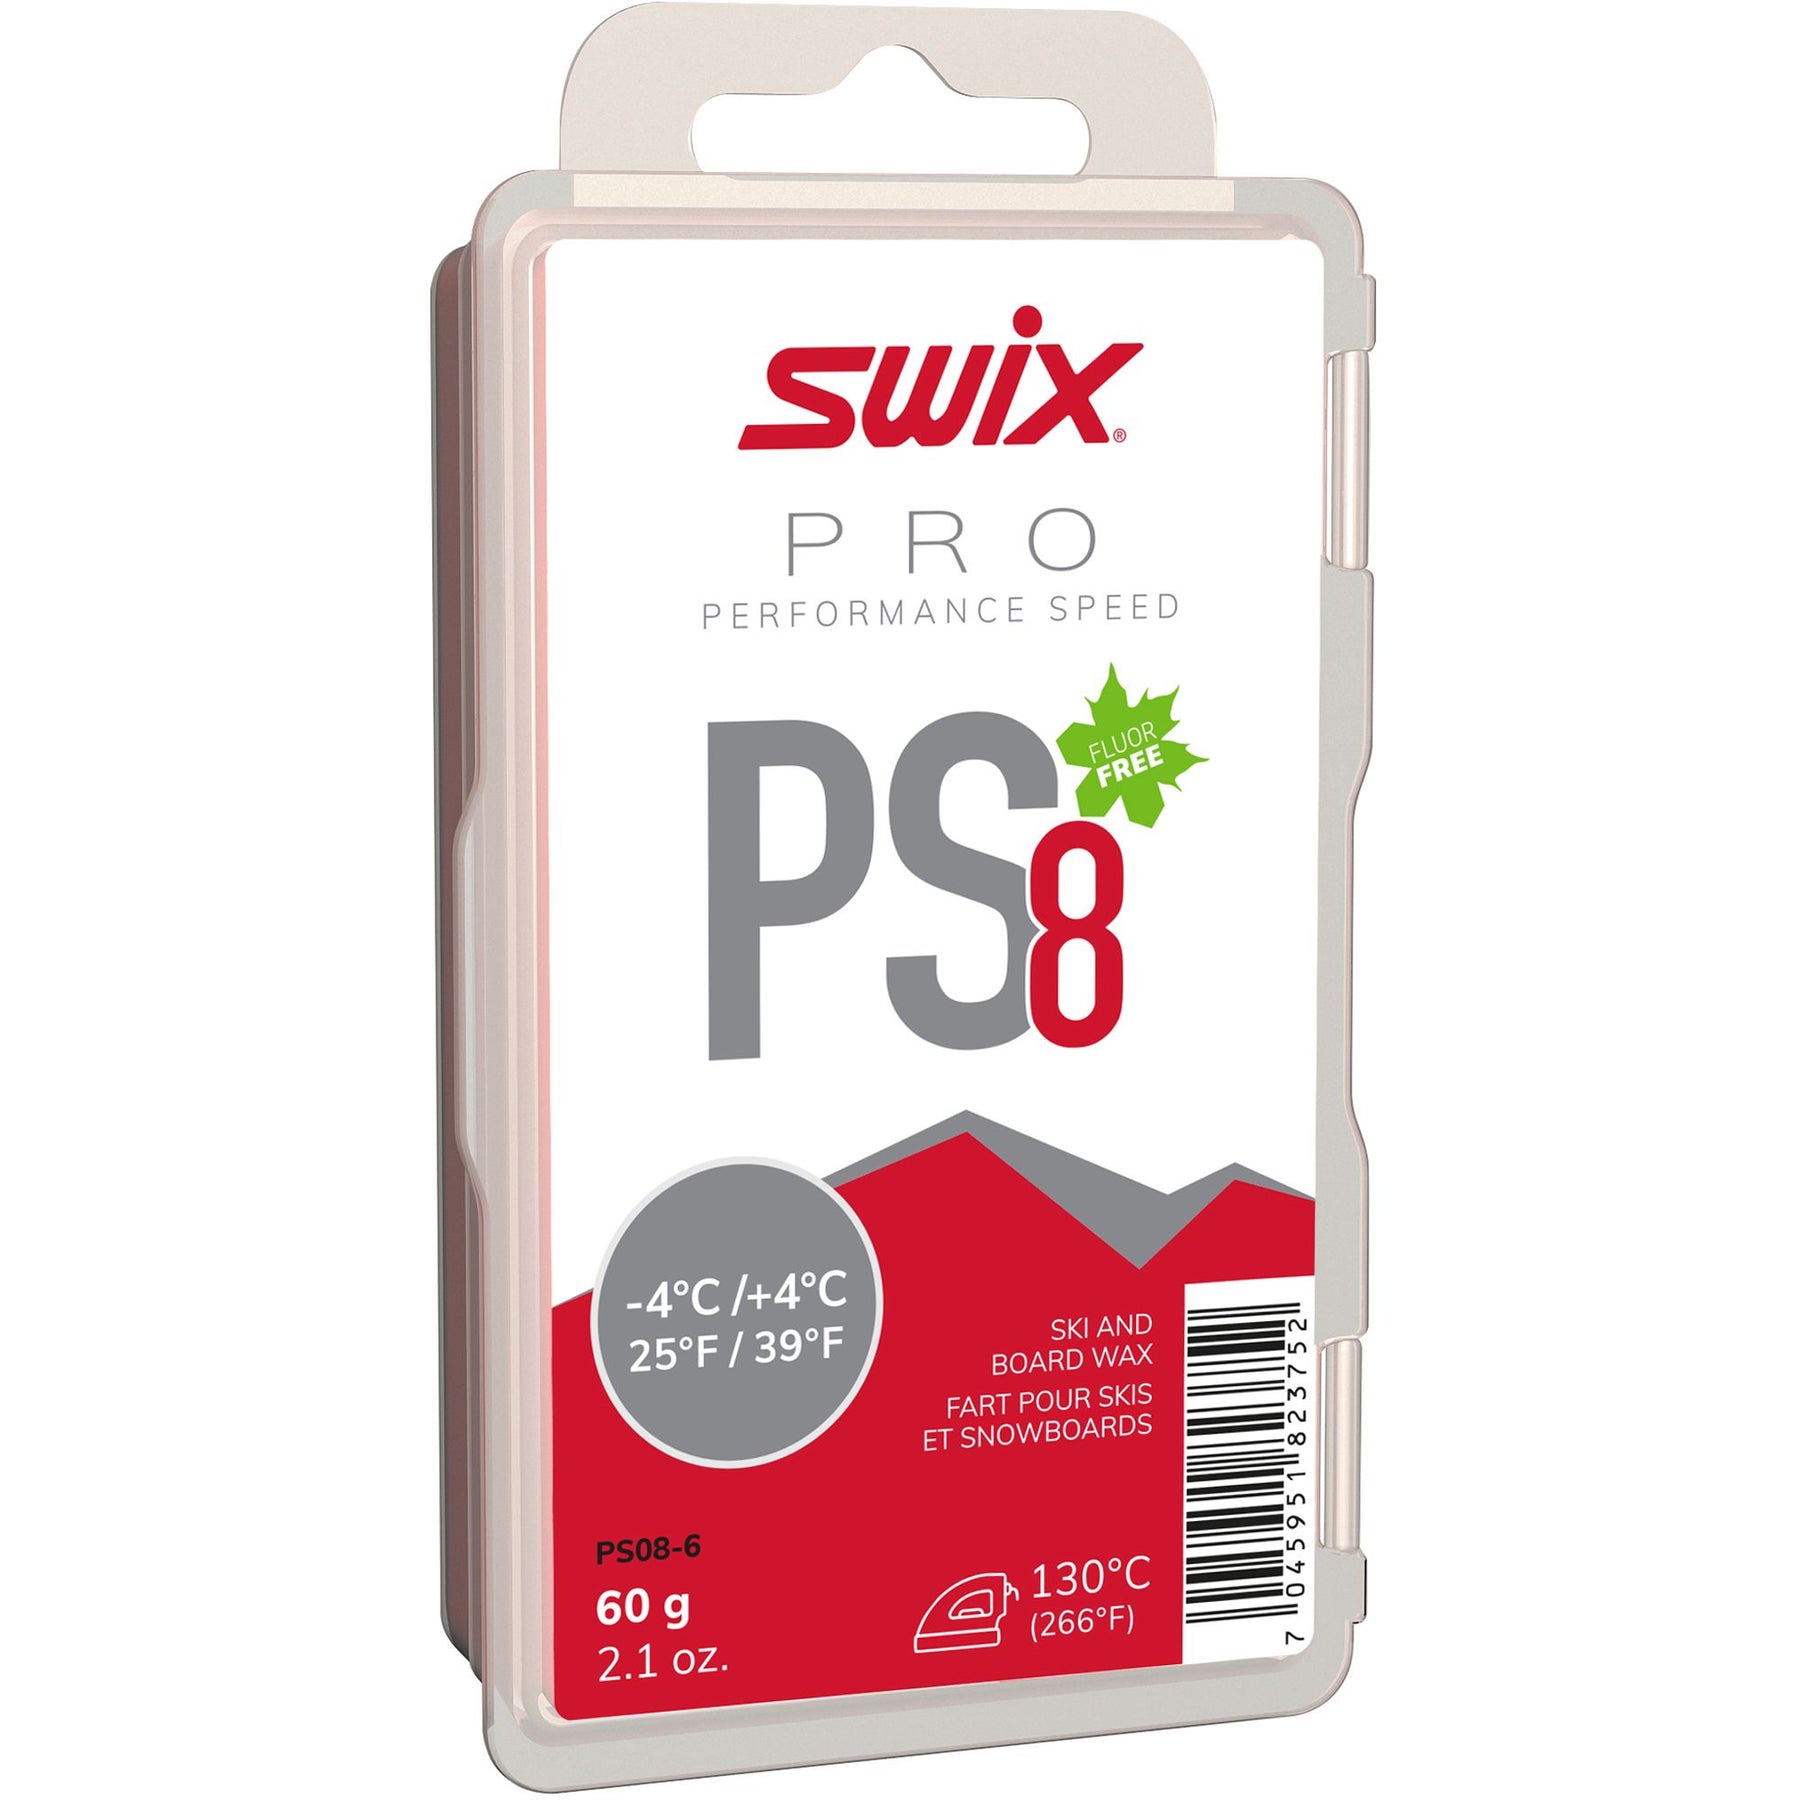 Swix Pro PS8 Red 60g